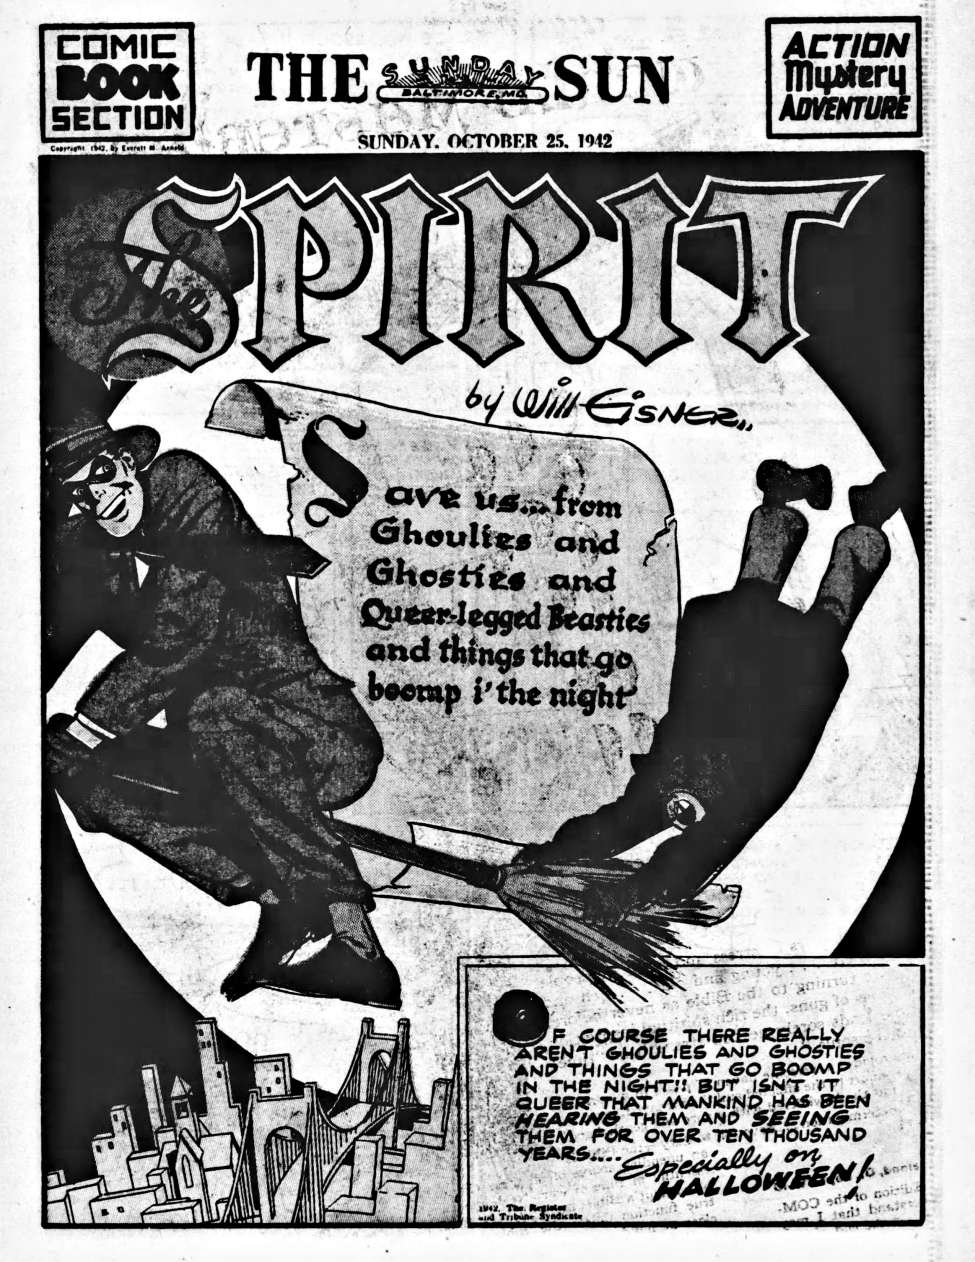 Comic Book Cover For The Spirit (1942-10-25) - Baltimore Sun (b/w)